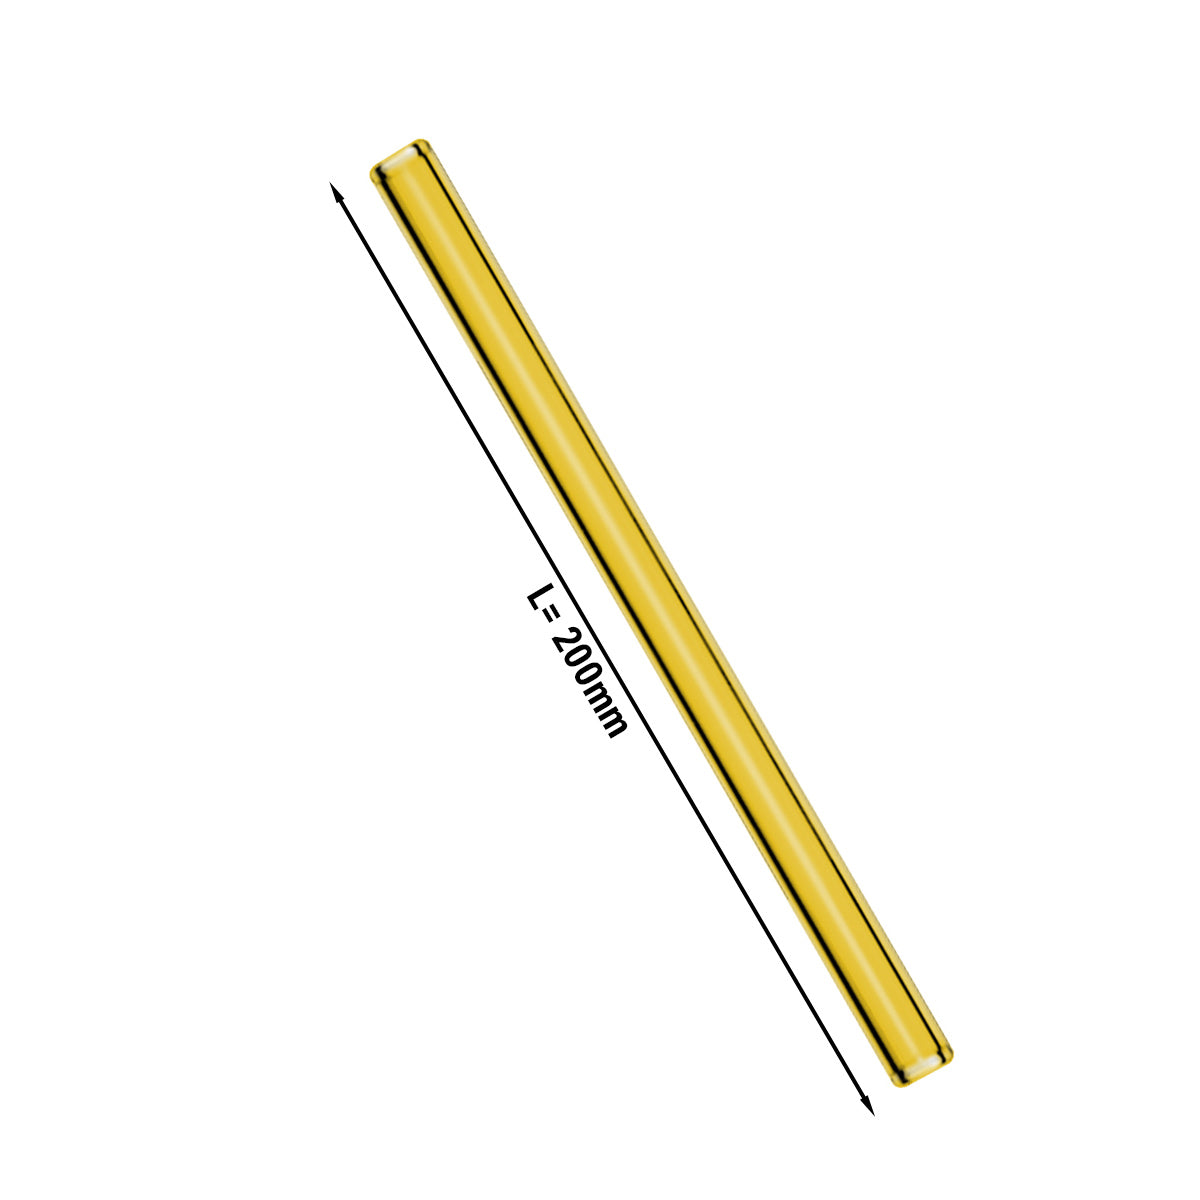 (50 броя) Стъклени сламки в жълто - 20 см - прави - вкл. Найлонова четка за почистване